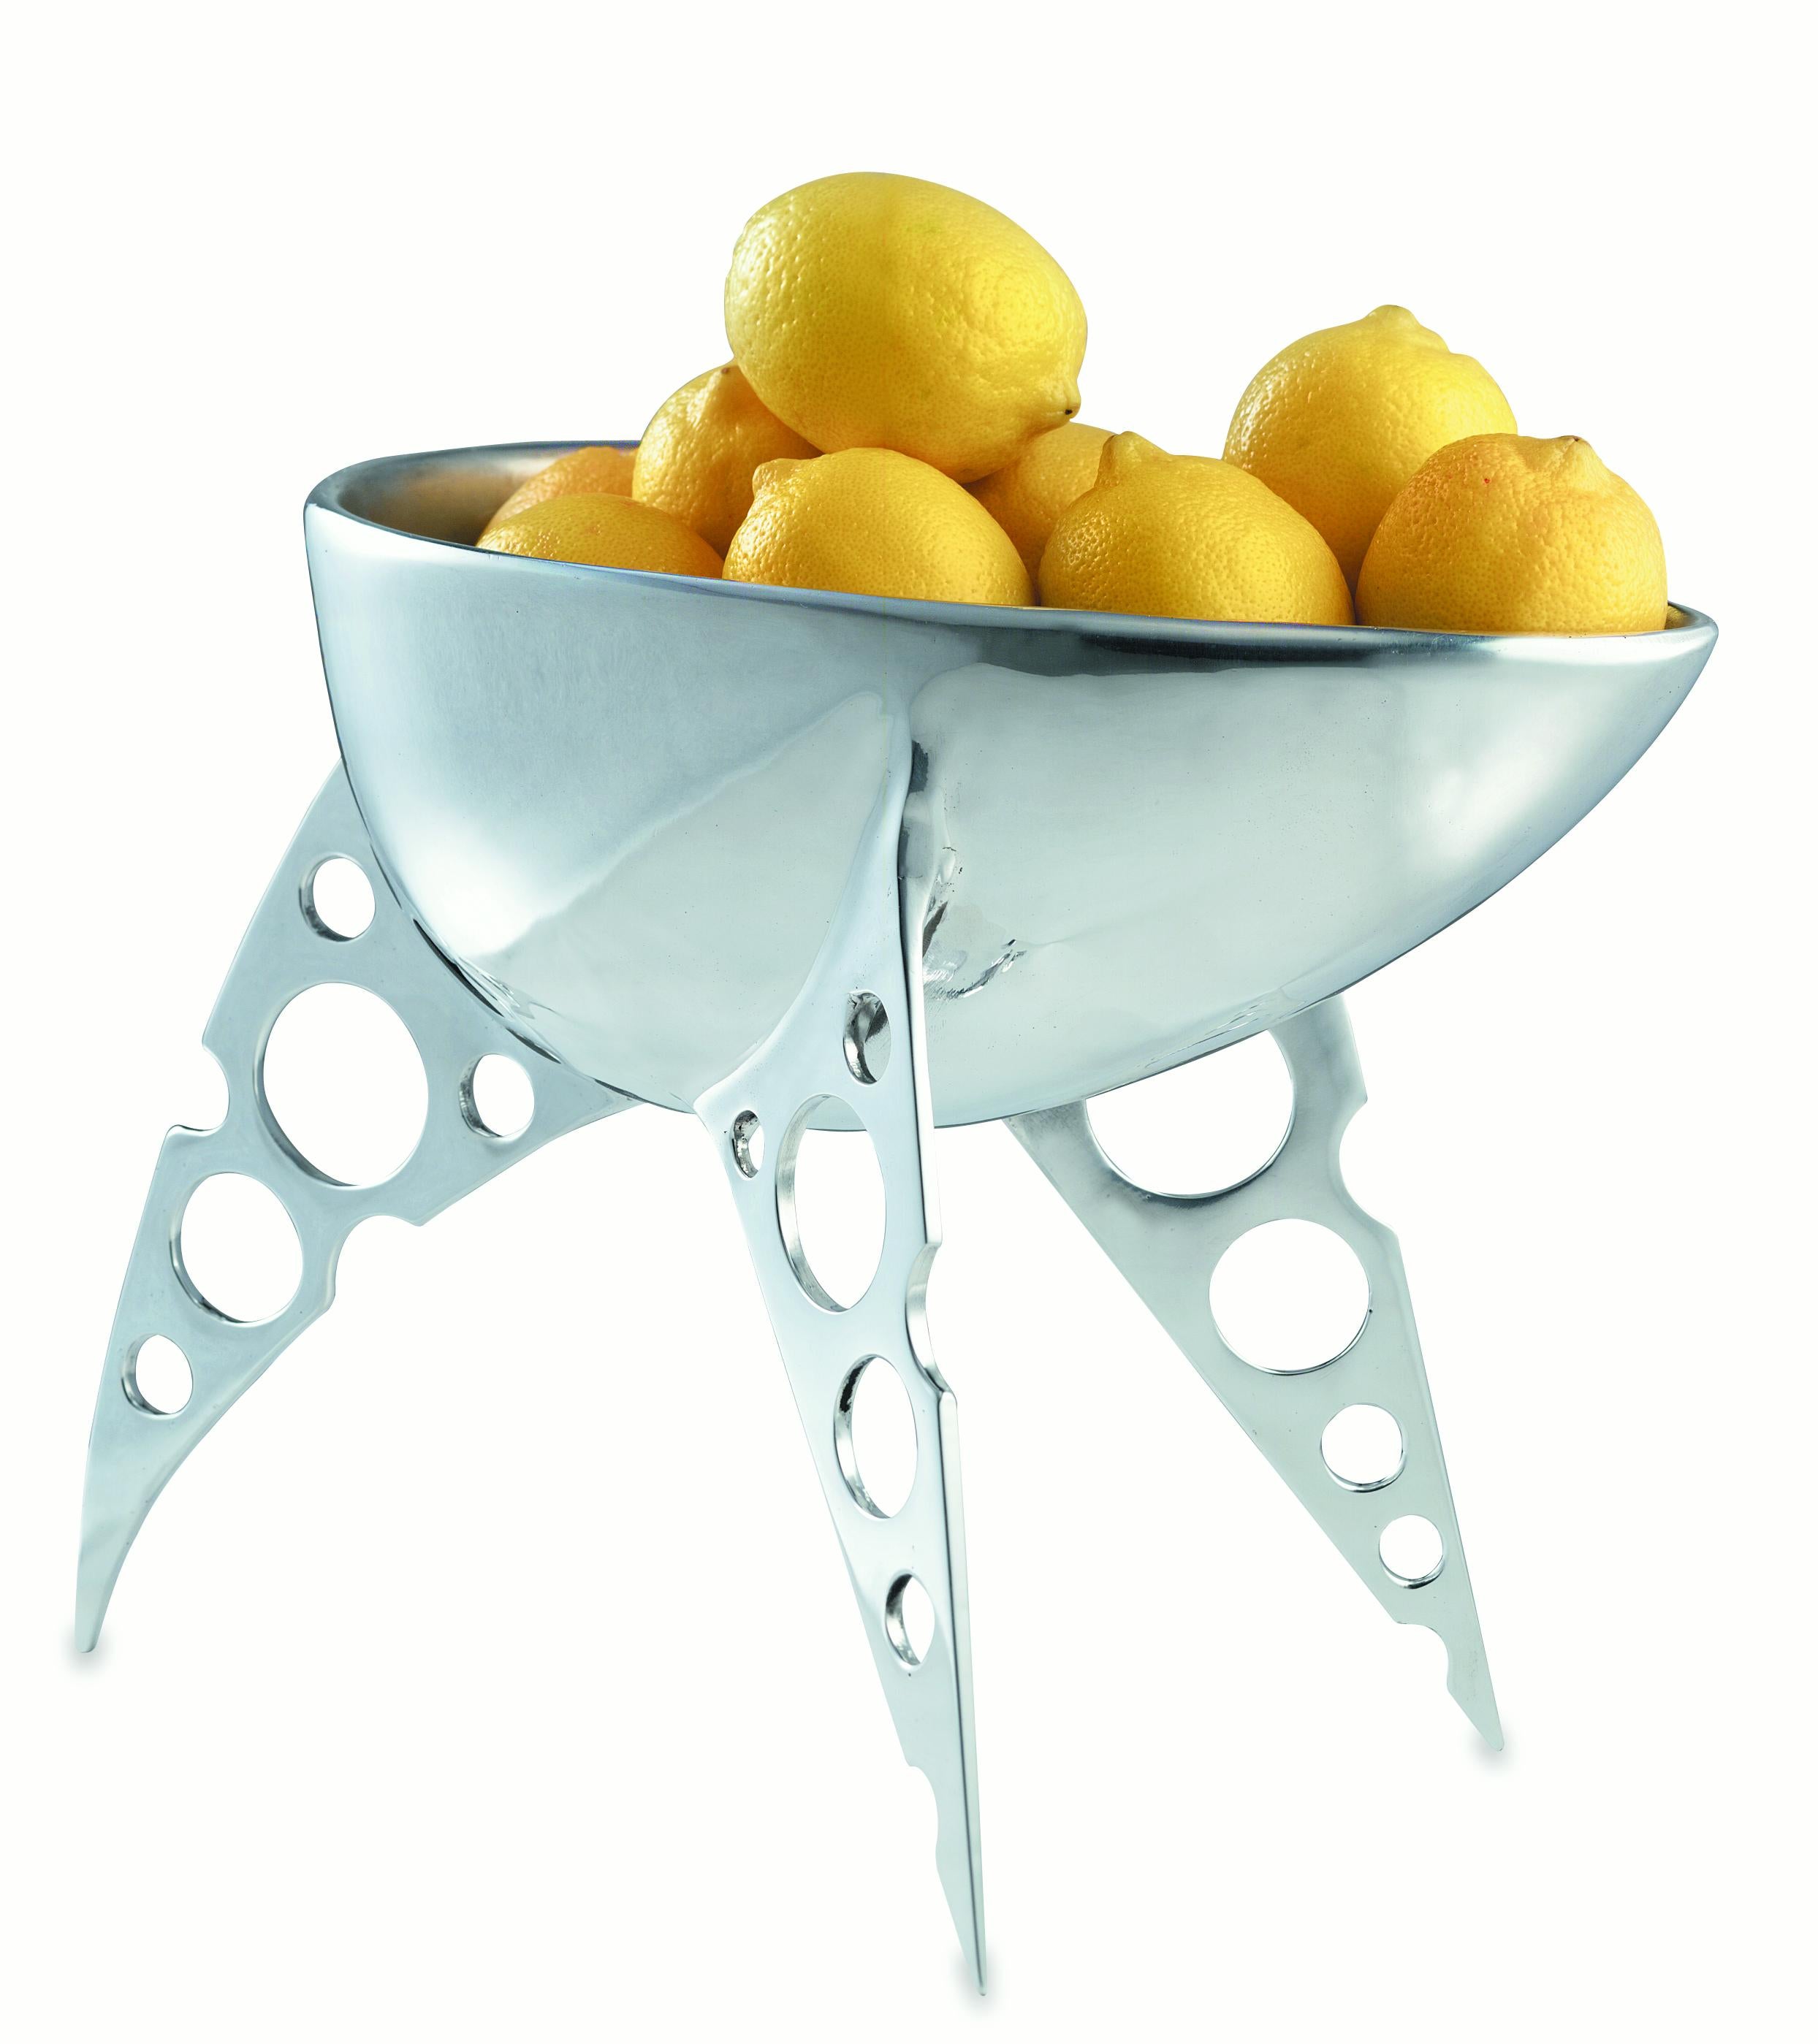 Silver Vessel, Fruit Bowl Sculptural Object by Raju Peddada - 